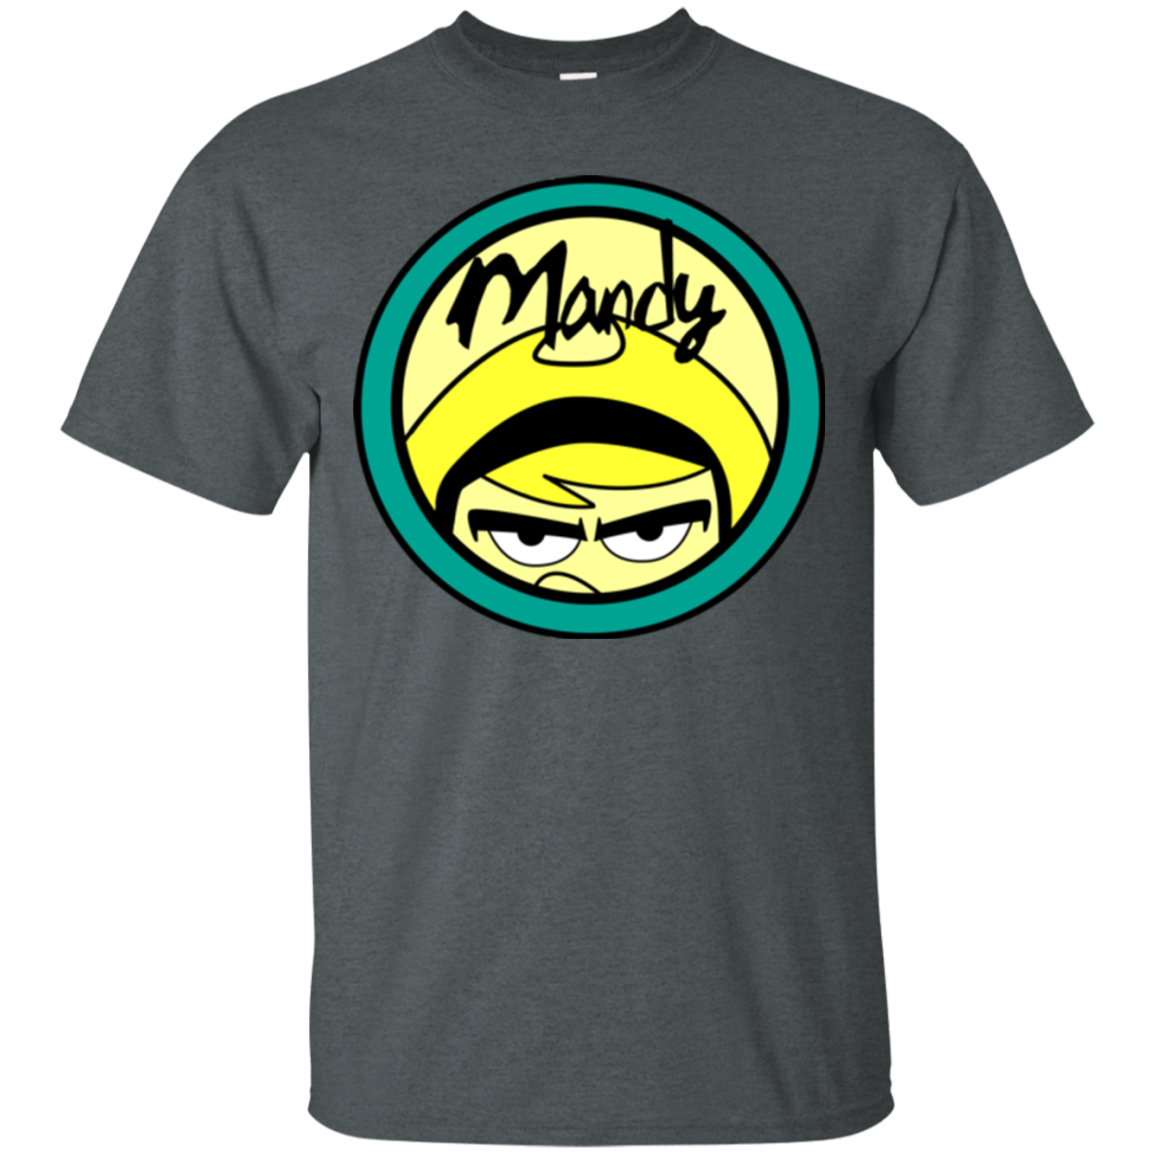 Mandy T-Shirt